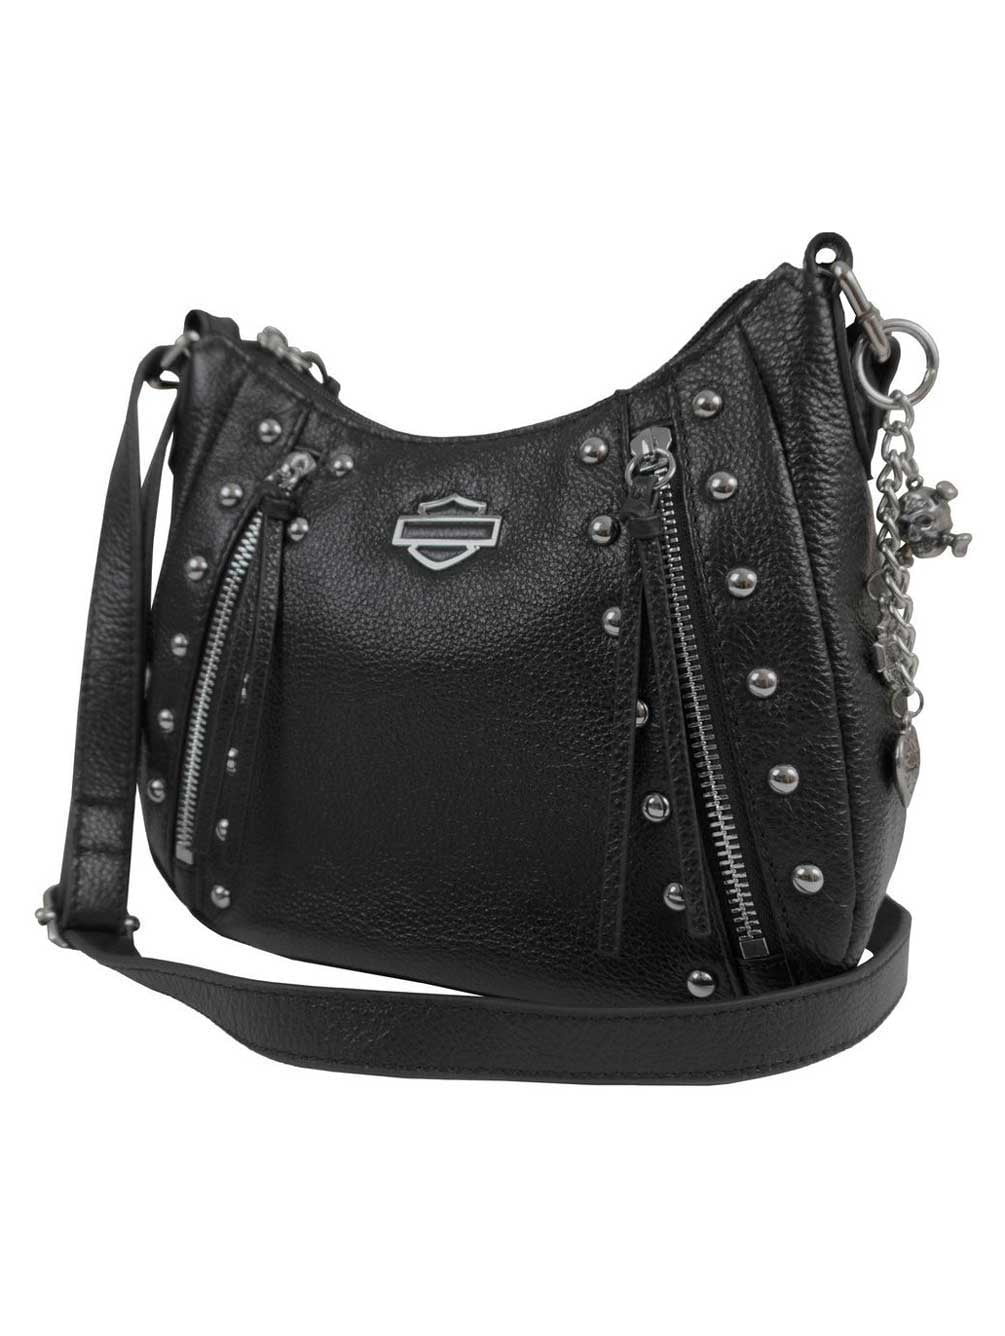 Harley Davidson Leather, Chain & Charm Handbag